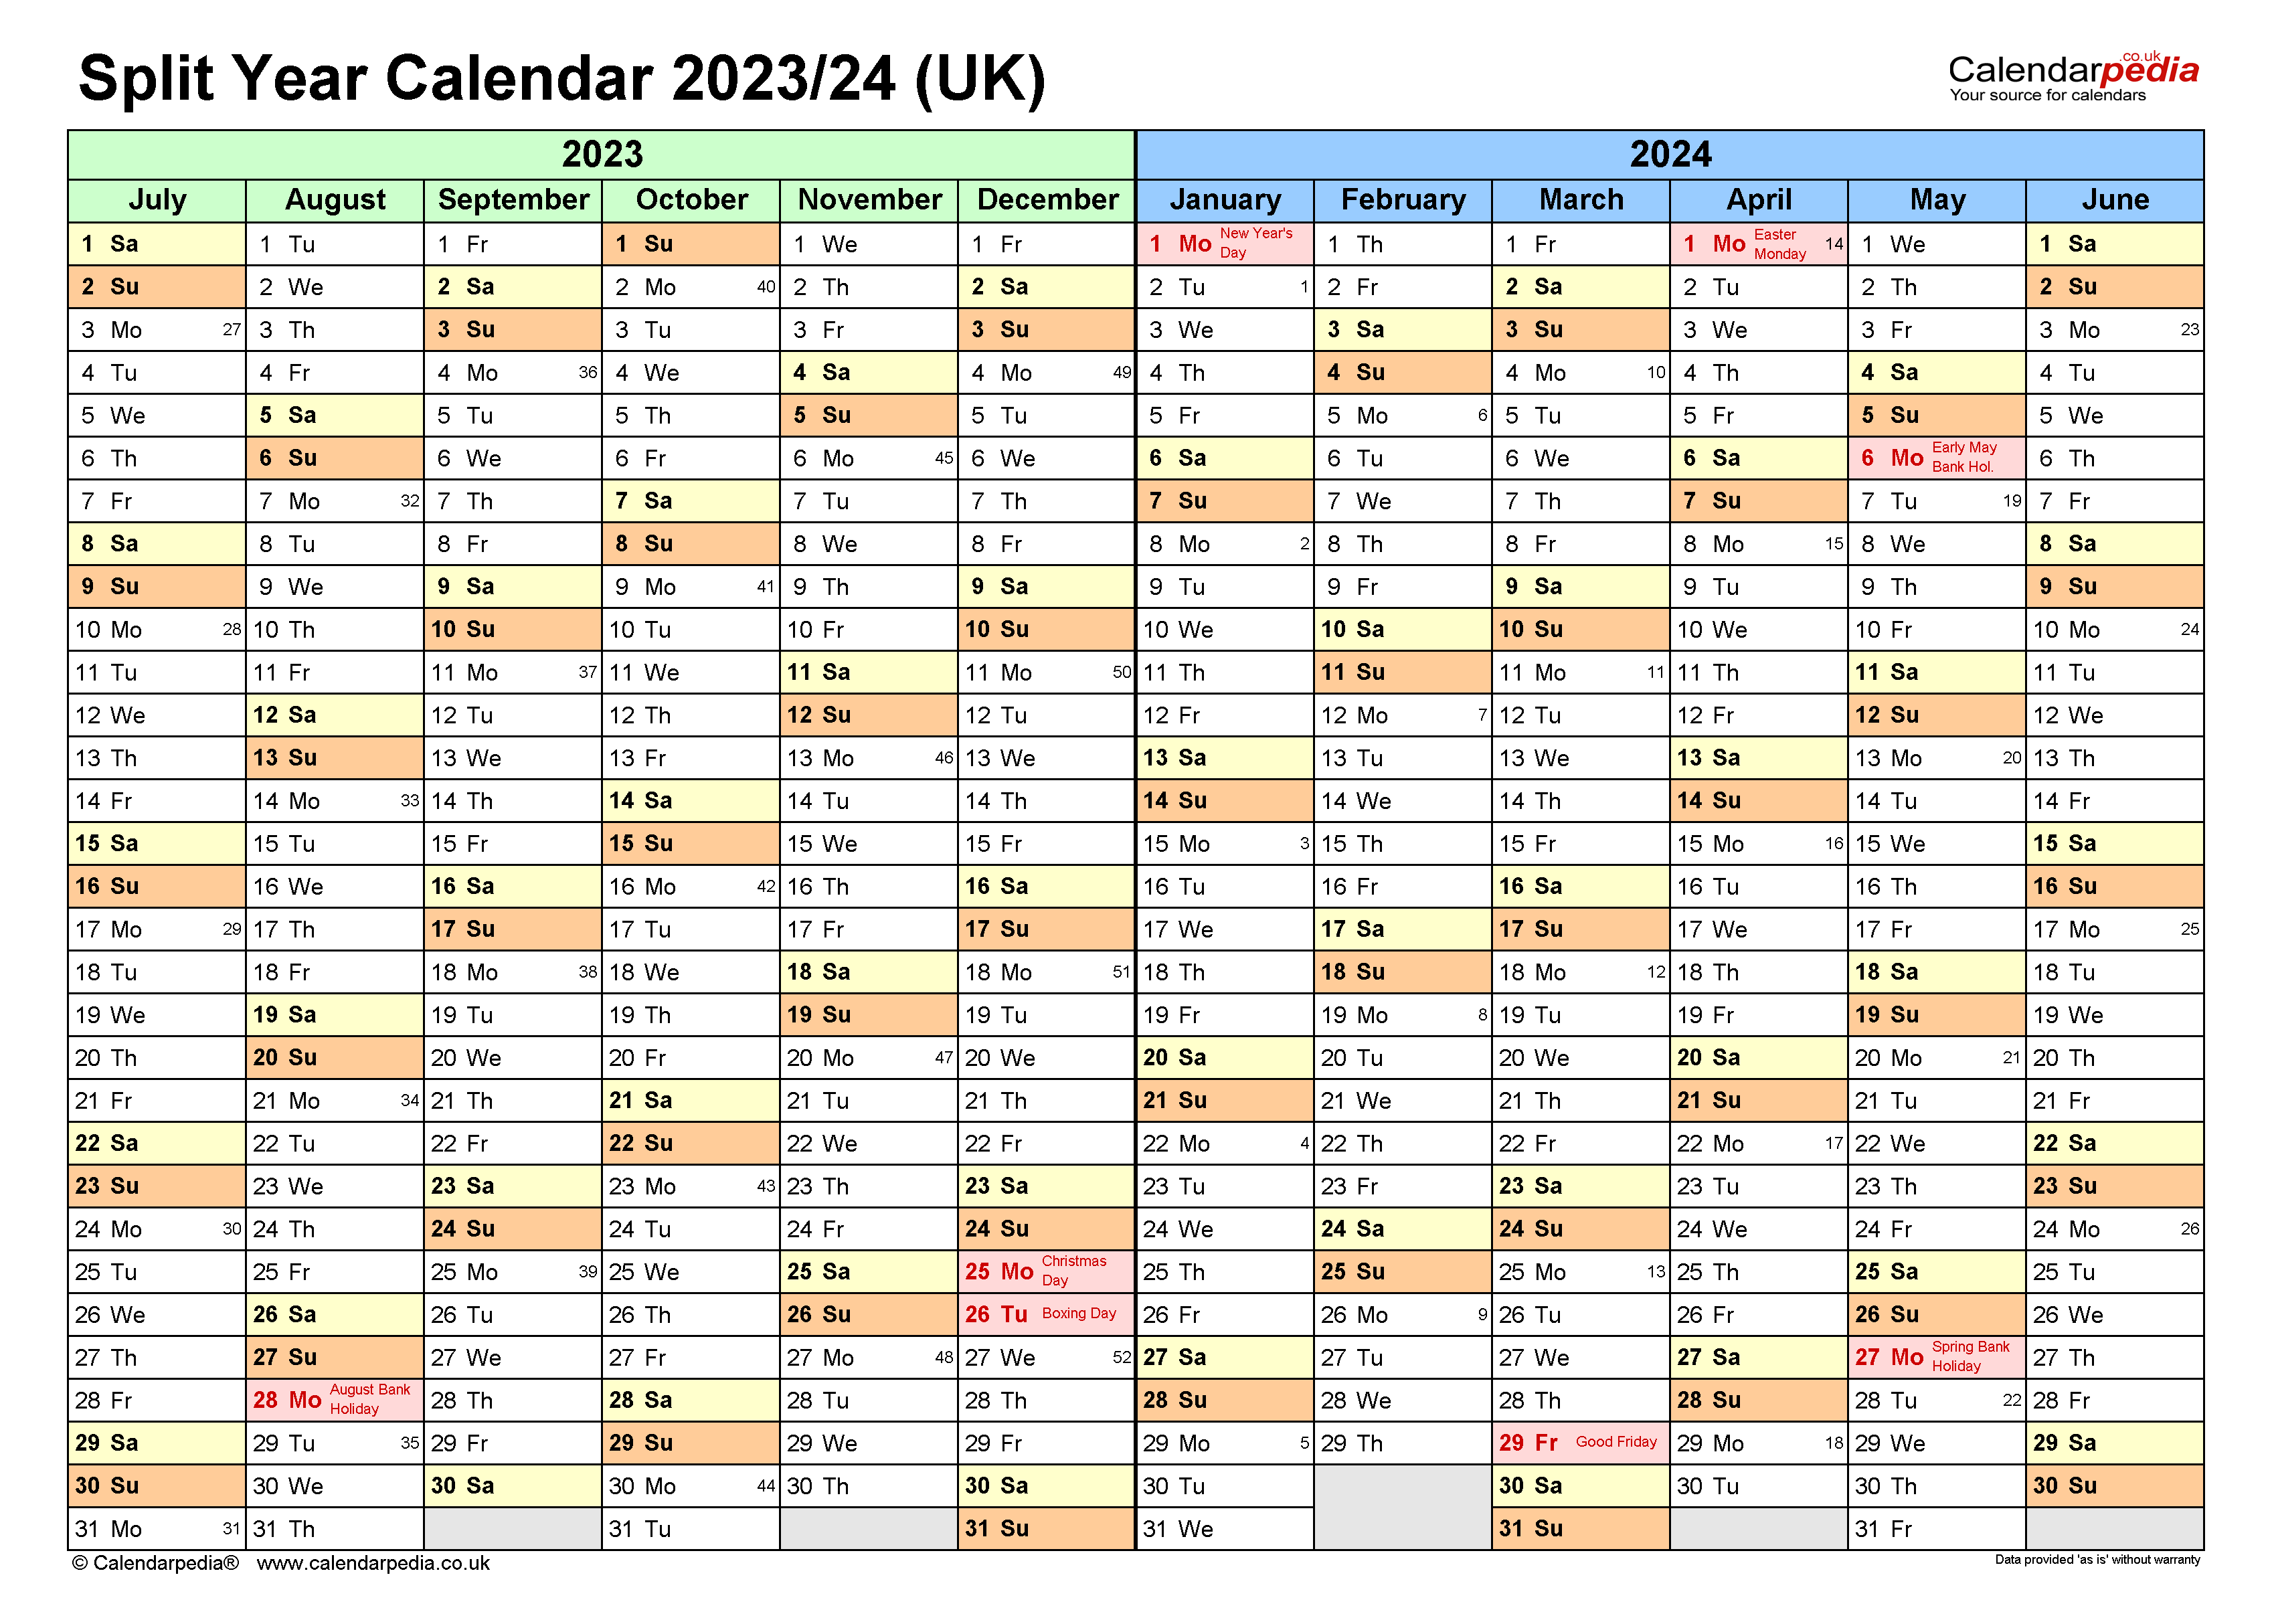 Split Year Calendars 2023/24 Uk (July To June) For Pdf with Calendar Sep 2023 - June 2024